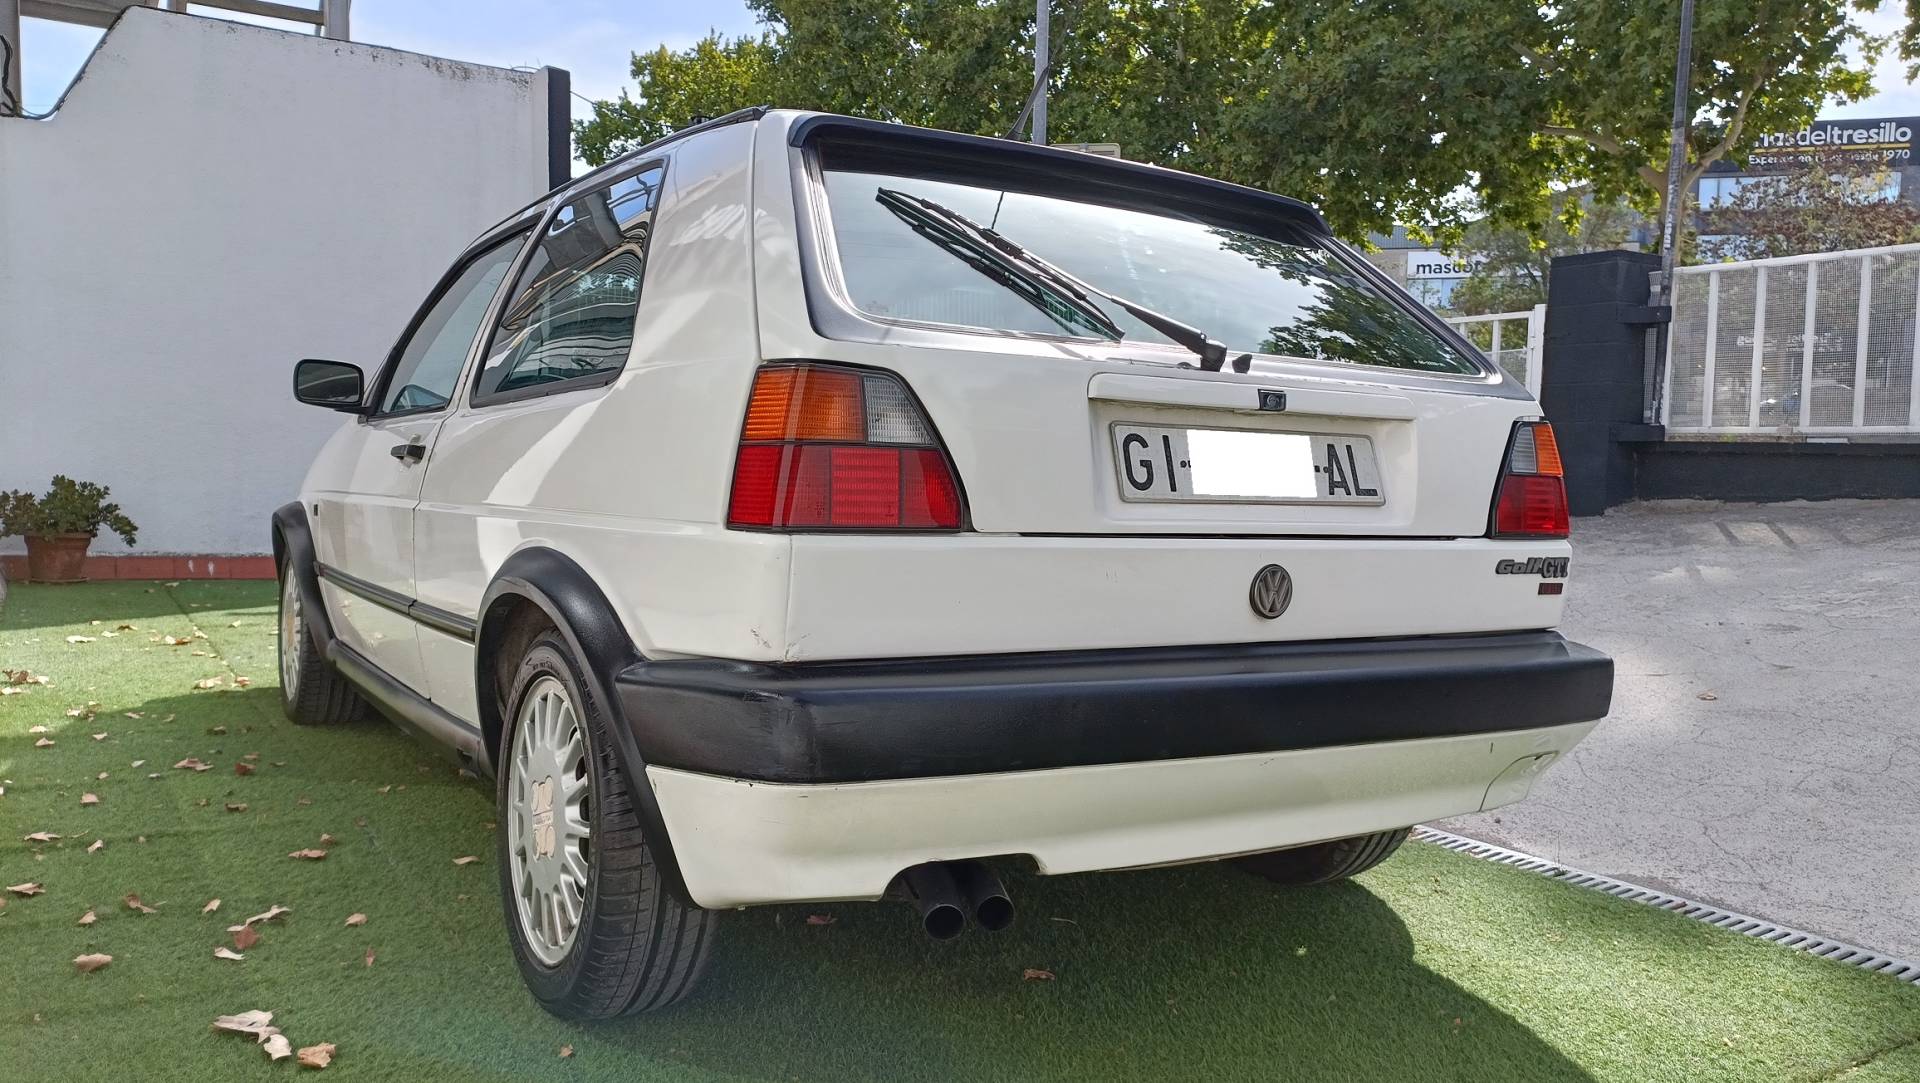 For Sale: Volkswagen Golf Mk II GTi G60 1.8 (1990) offered for €12,900